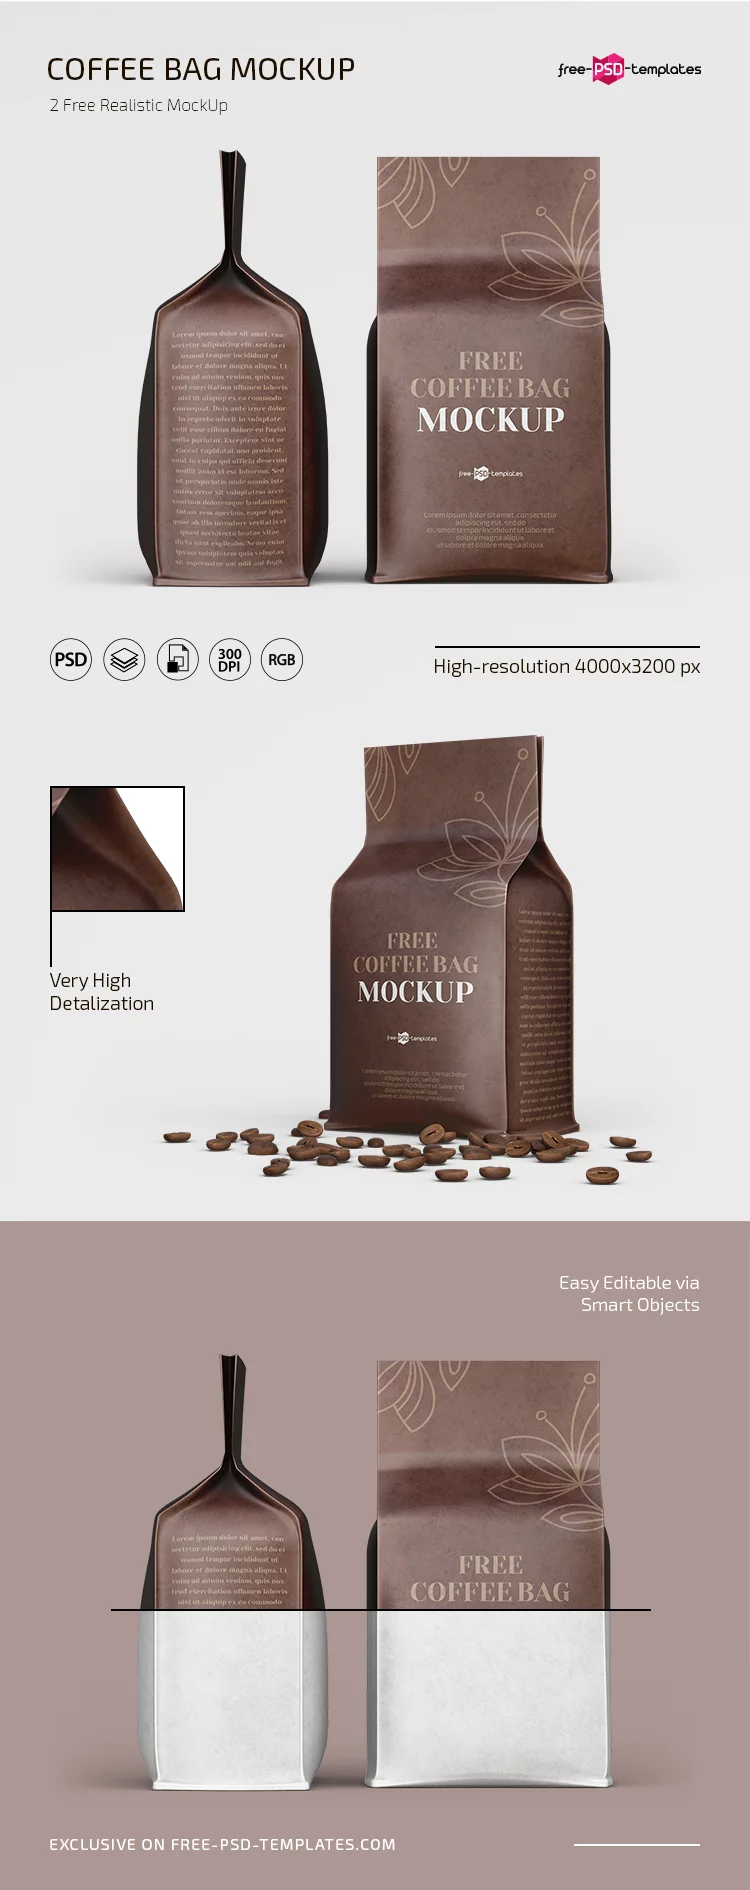 Coffee Bag Mockup in PSD